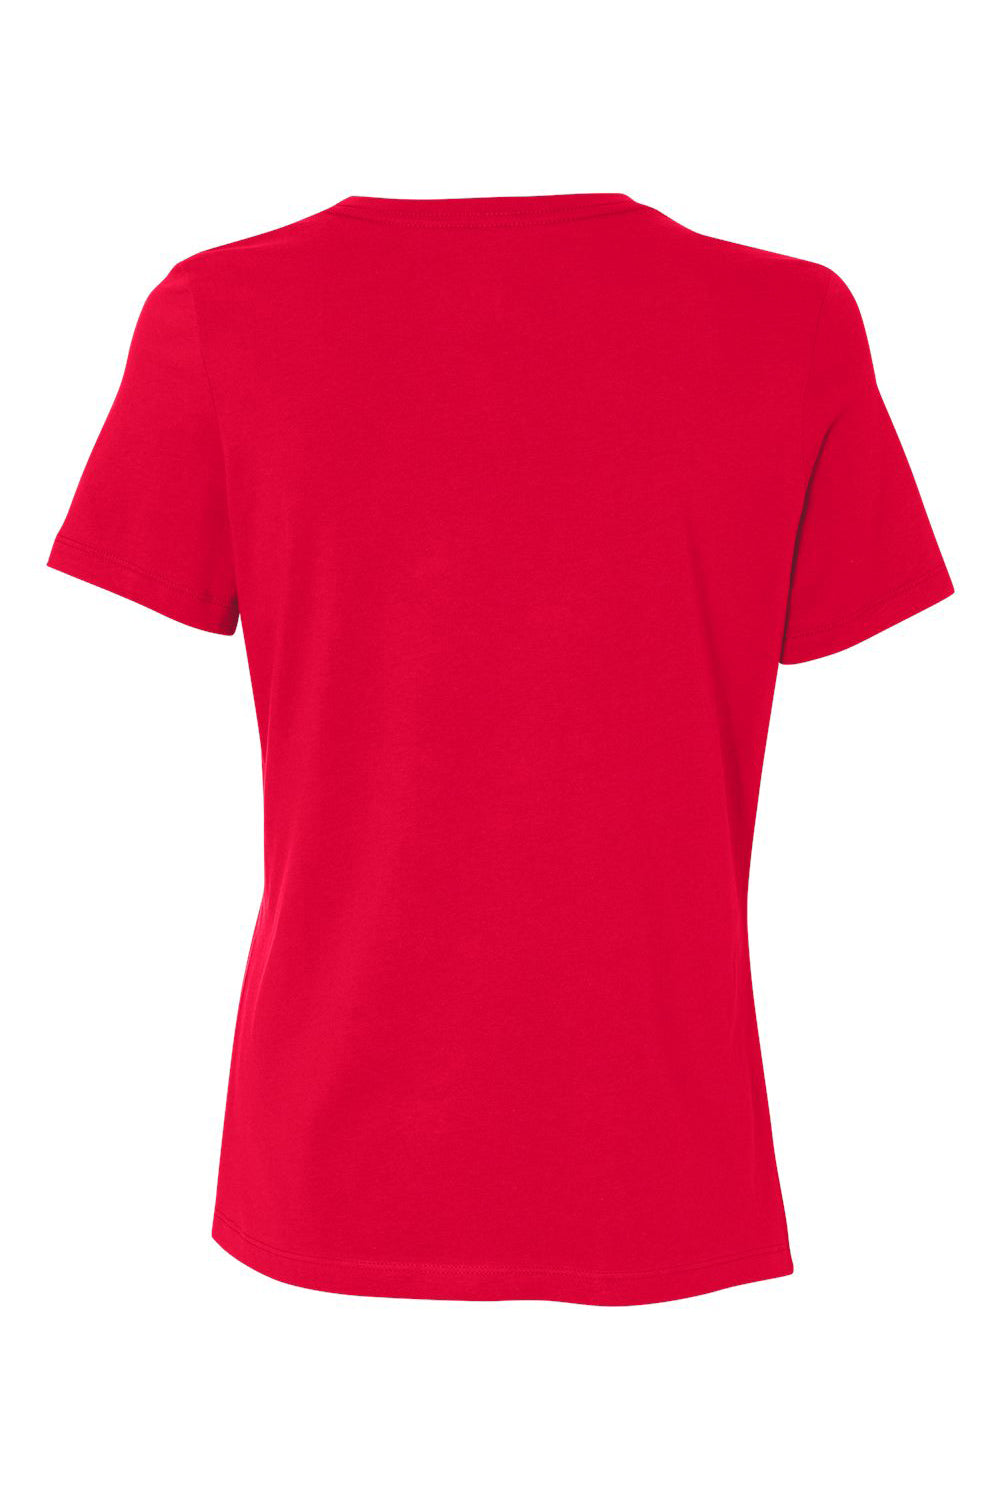 Bella + Canvas BC6400/B6400/6400 Womens Relaxed Jersey Short Sleeve Crewneck T-Shirt Red Flat Back